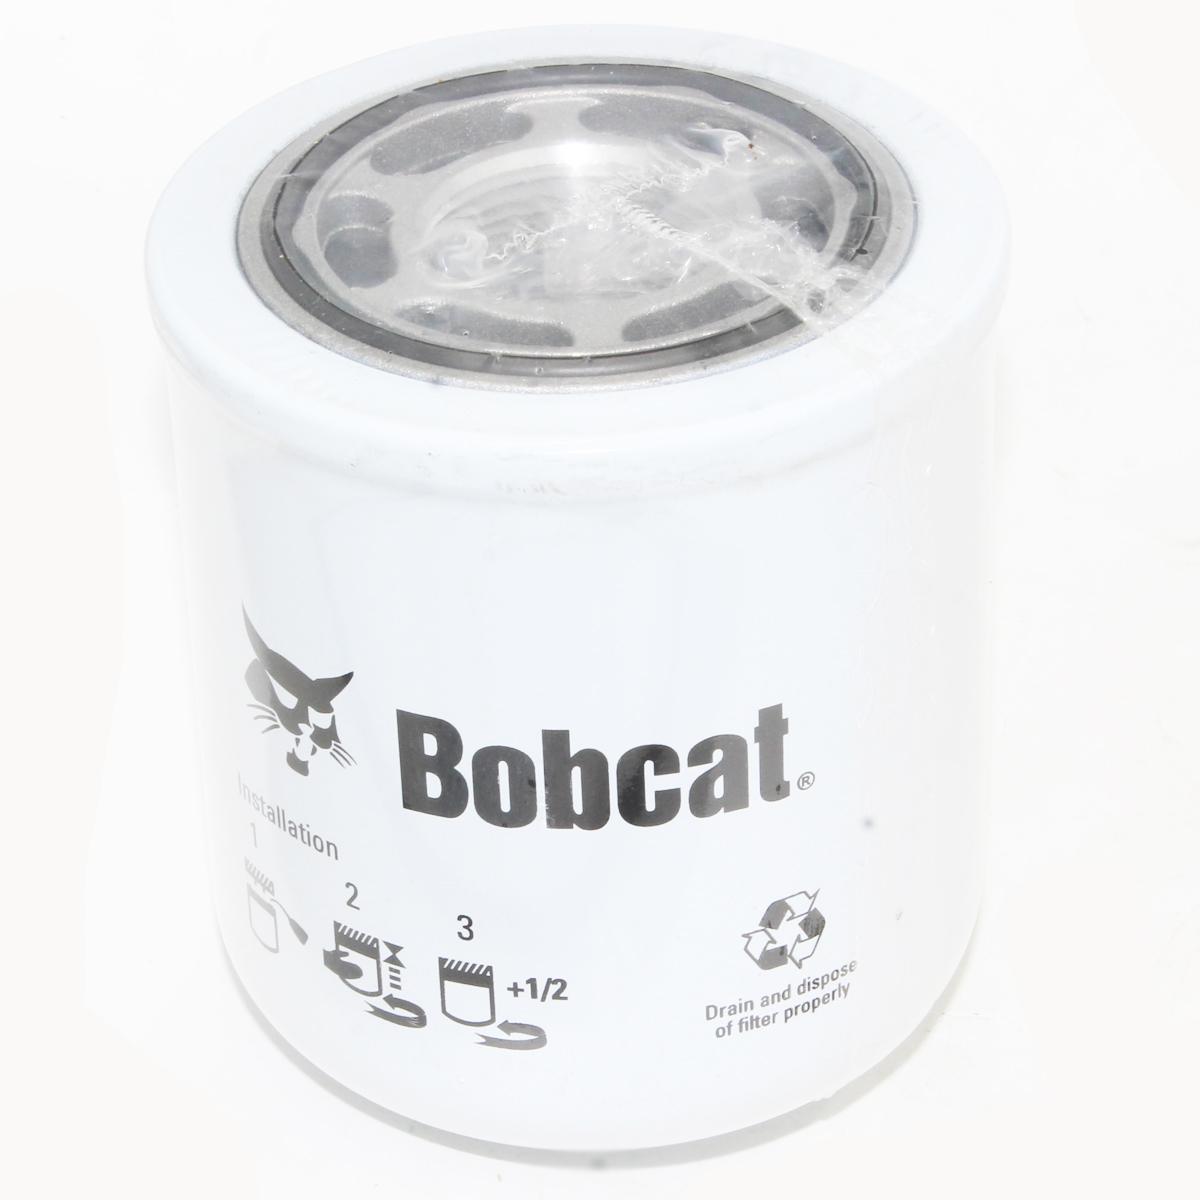 BOBCAT 66 869 26 bobcat Hydro Charge filter Bobcat Lawnmower Parts, Bobcat